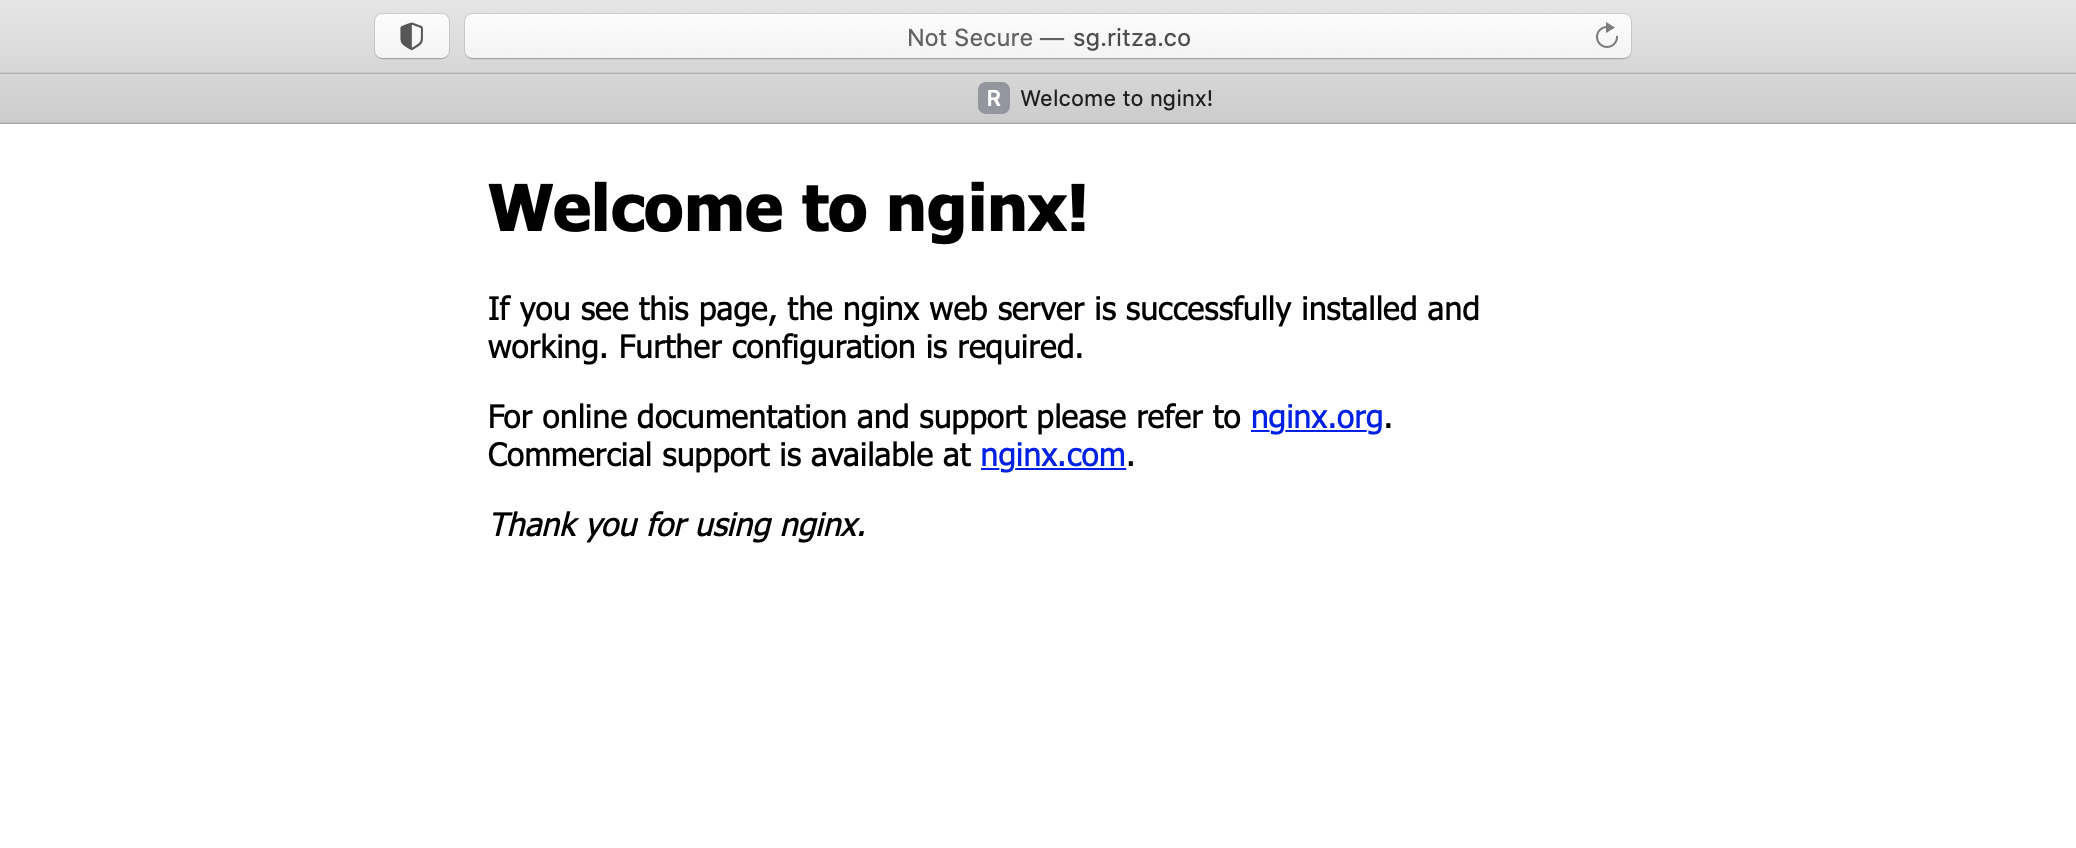 Default Nginx Page